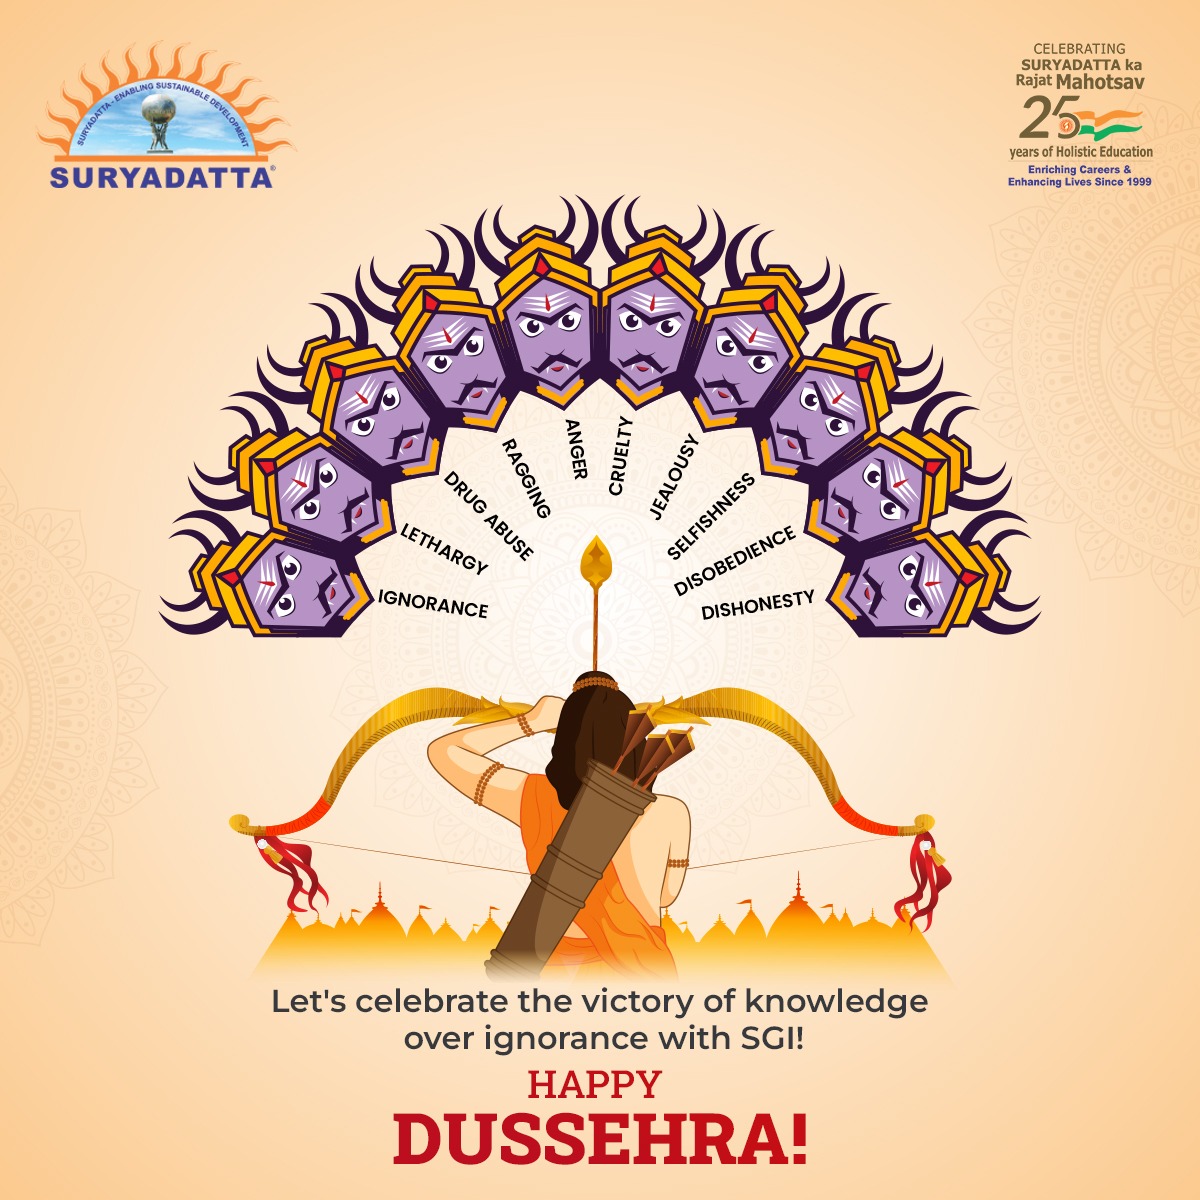 As we celebrate Dussehra, let's ignite the flames of goodness within each of us! Wishing you a triumphant and joyful Dussehra. Happy Dussehra! #Dussehra #SGI #LifeAtSGI #Vijayadashami #GoodOverEvil #DussehraFestival #Ramayana #Ravana #LordRama #Celebration #FestiveVibes